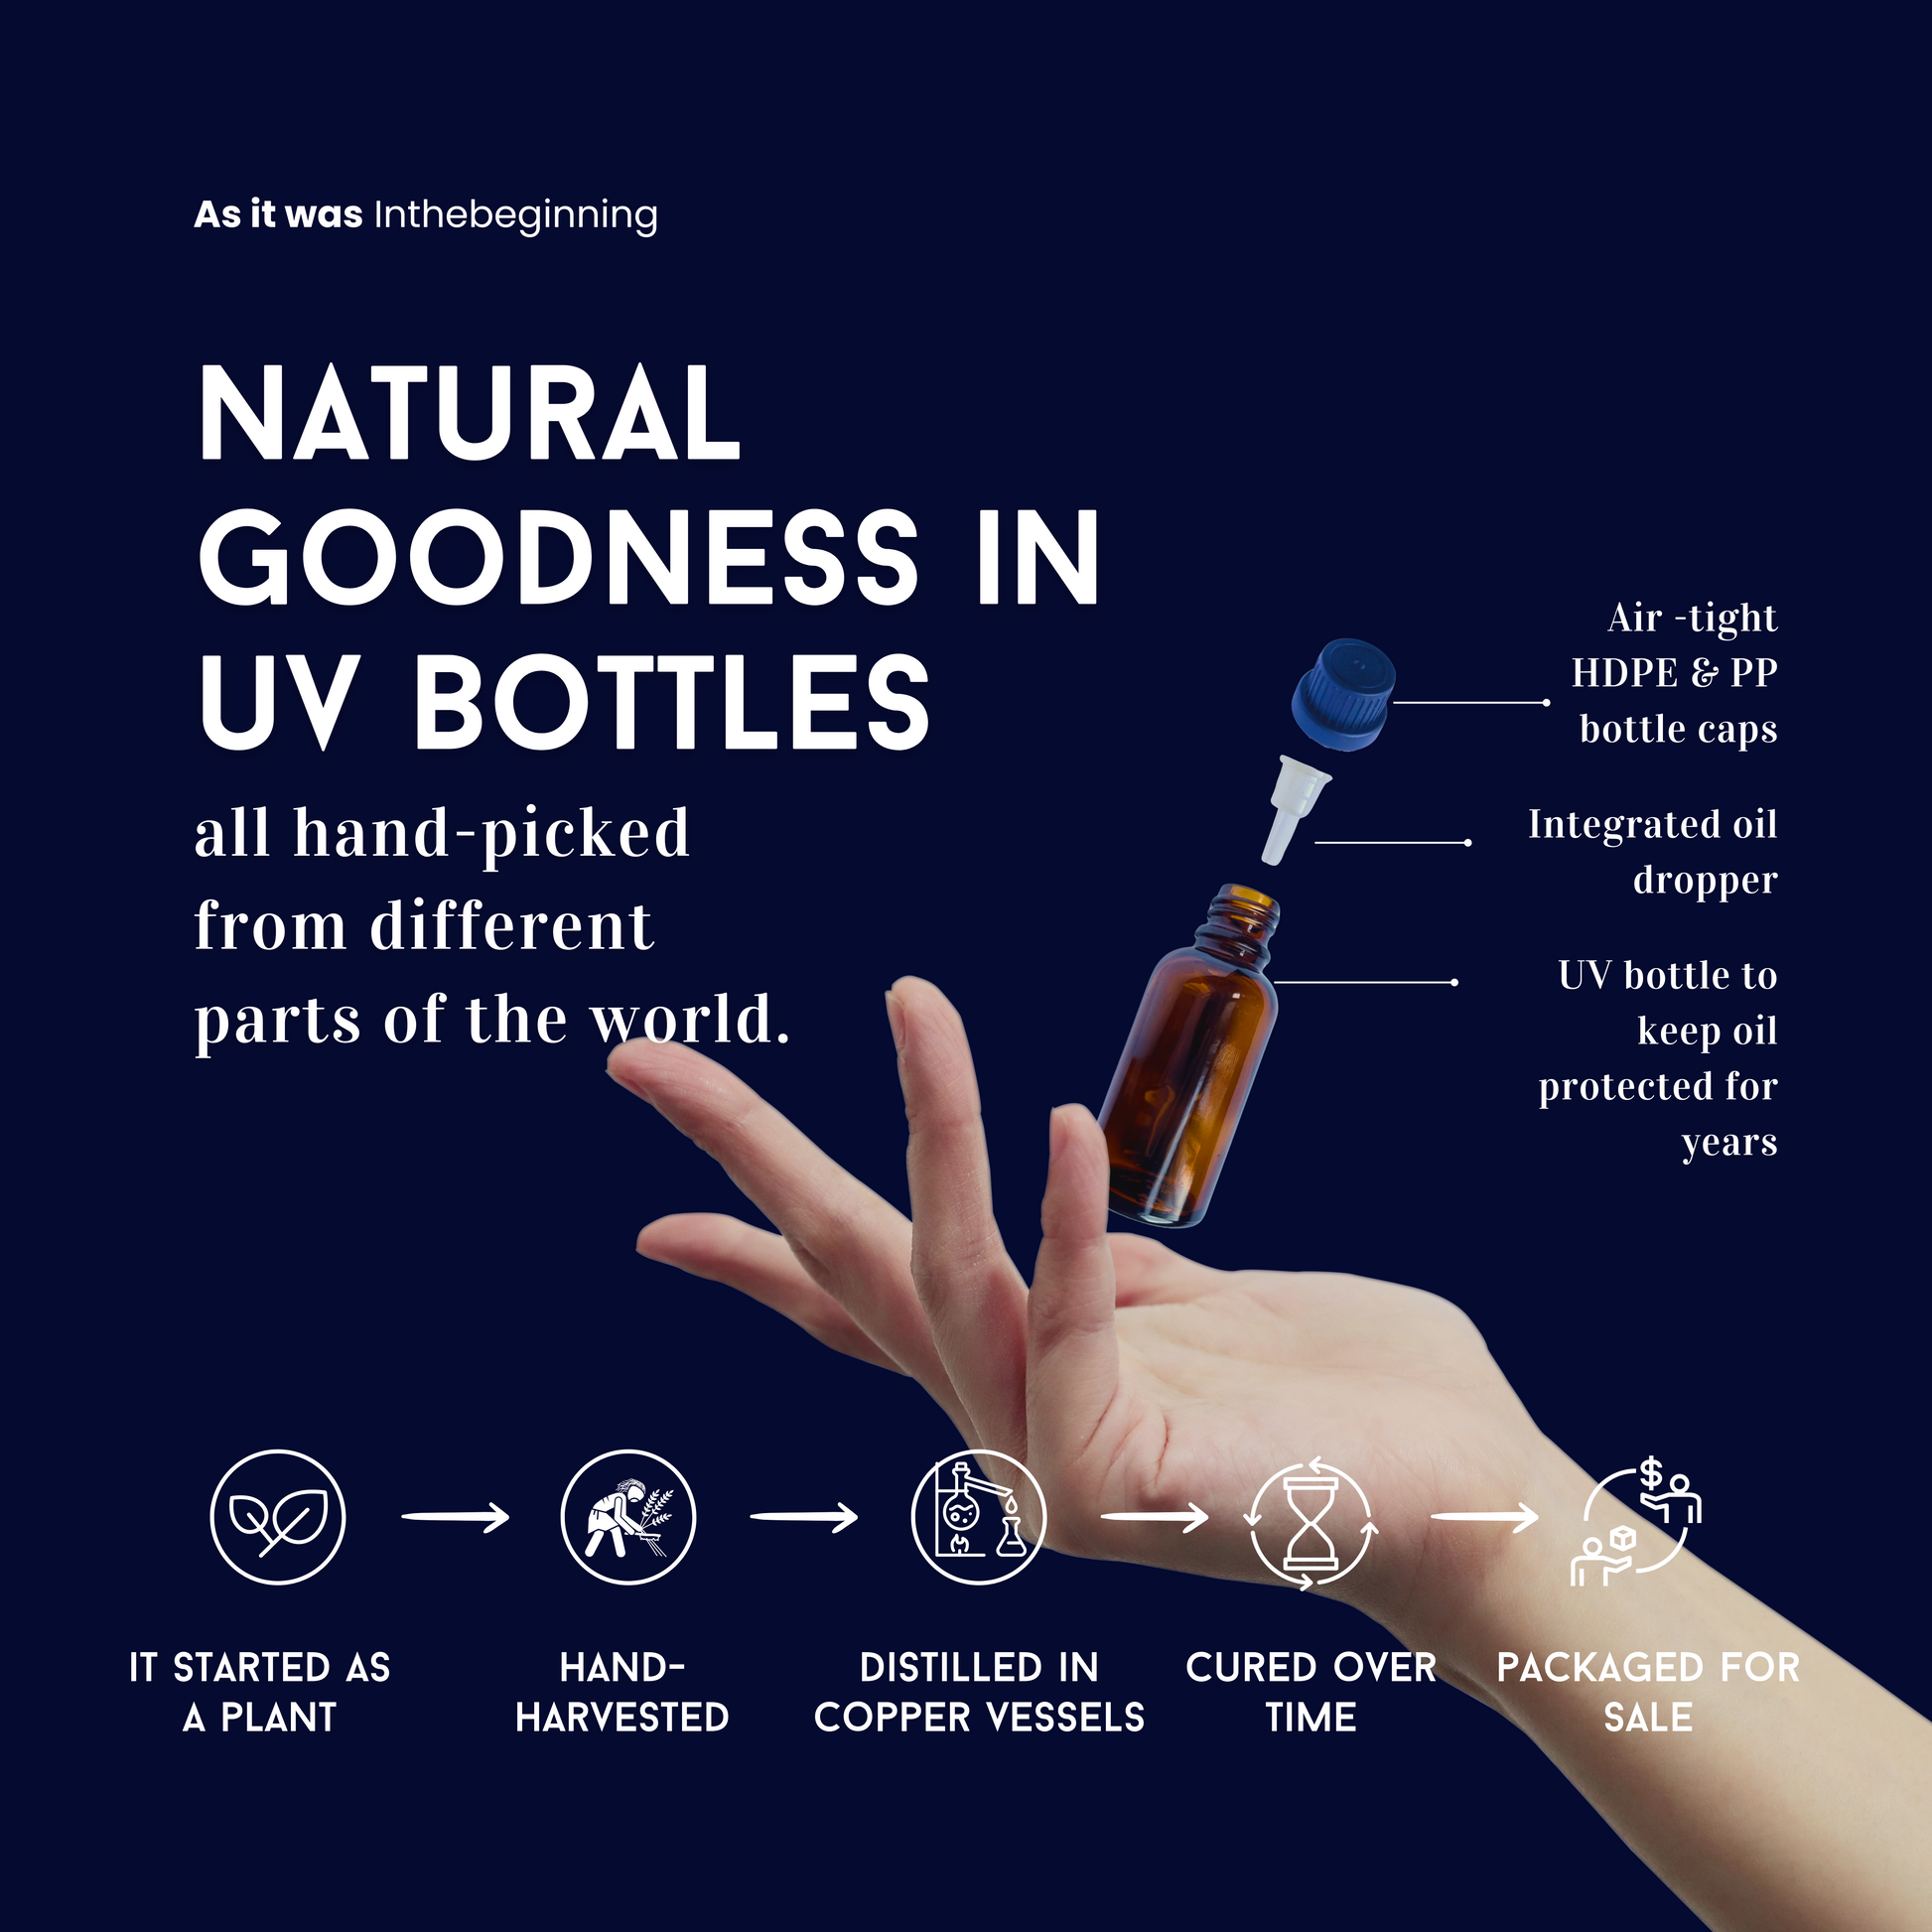 Organic Egyptian Neroli Essential Oil | 30ml / 1oz UV Bottle | Pure Floral Oil | Unblended | Aromatherapy | Vegan | Spirituality| Nature Heals - ITBO Green